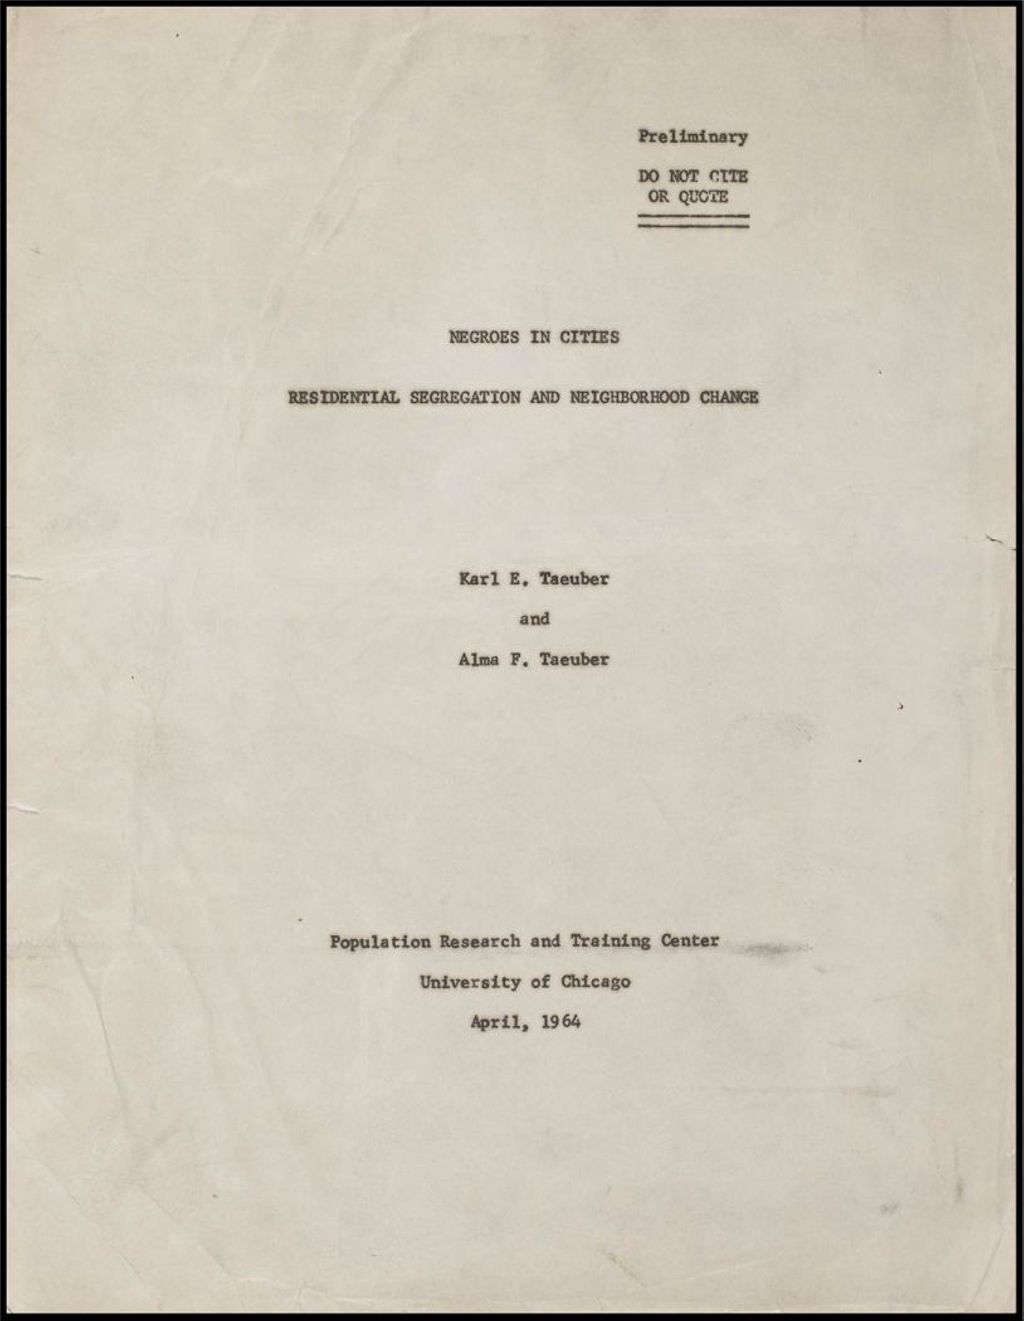 U of C "Negro's in Cities" Residential Segregation Neighborhood Change, 1964 (Folder III-510)